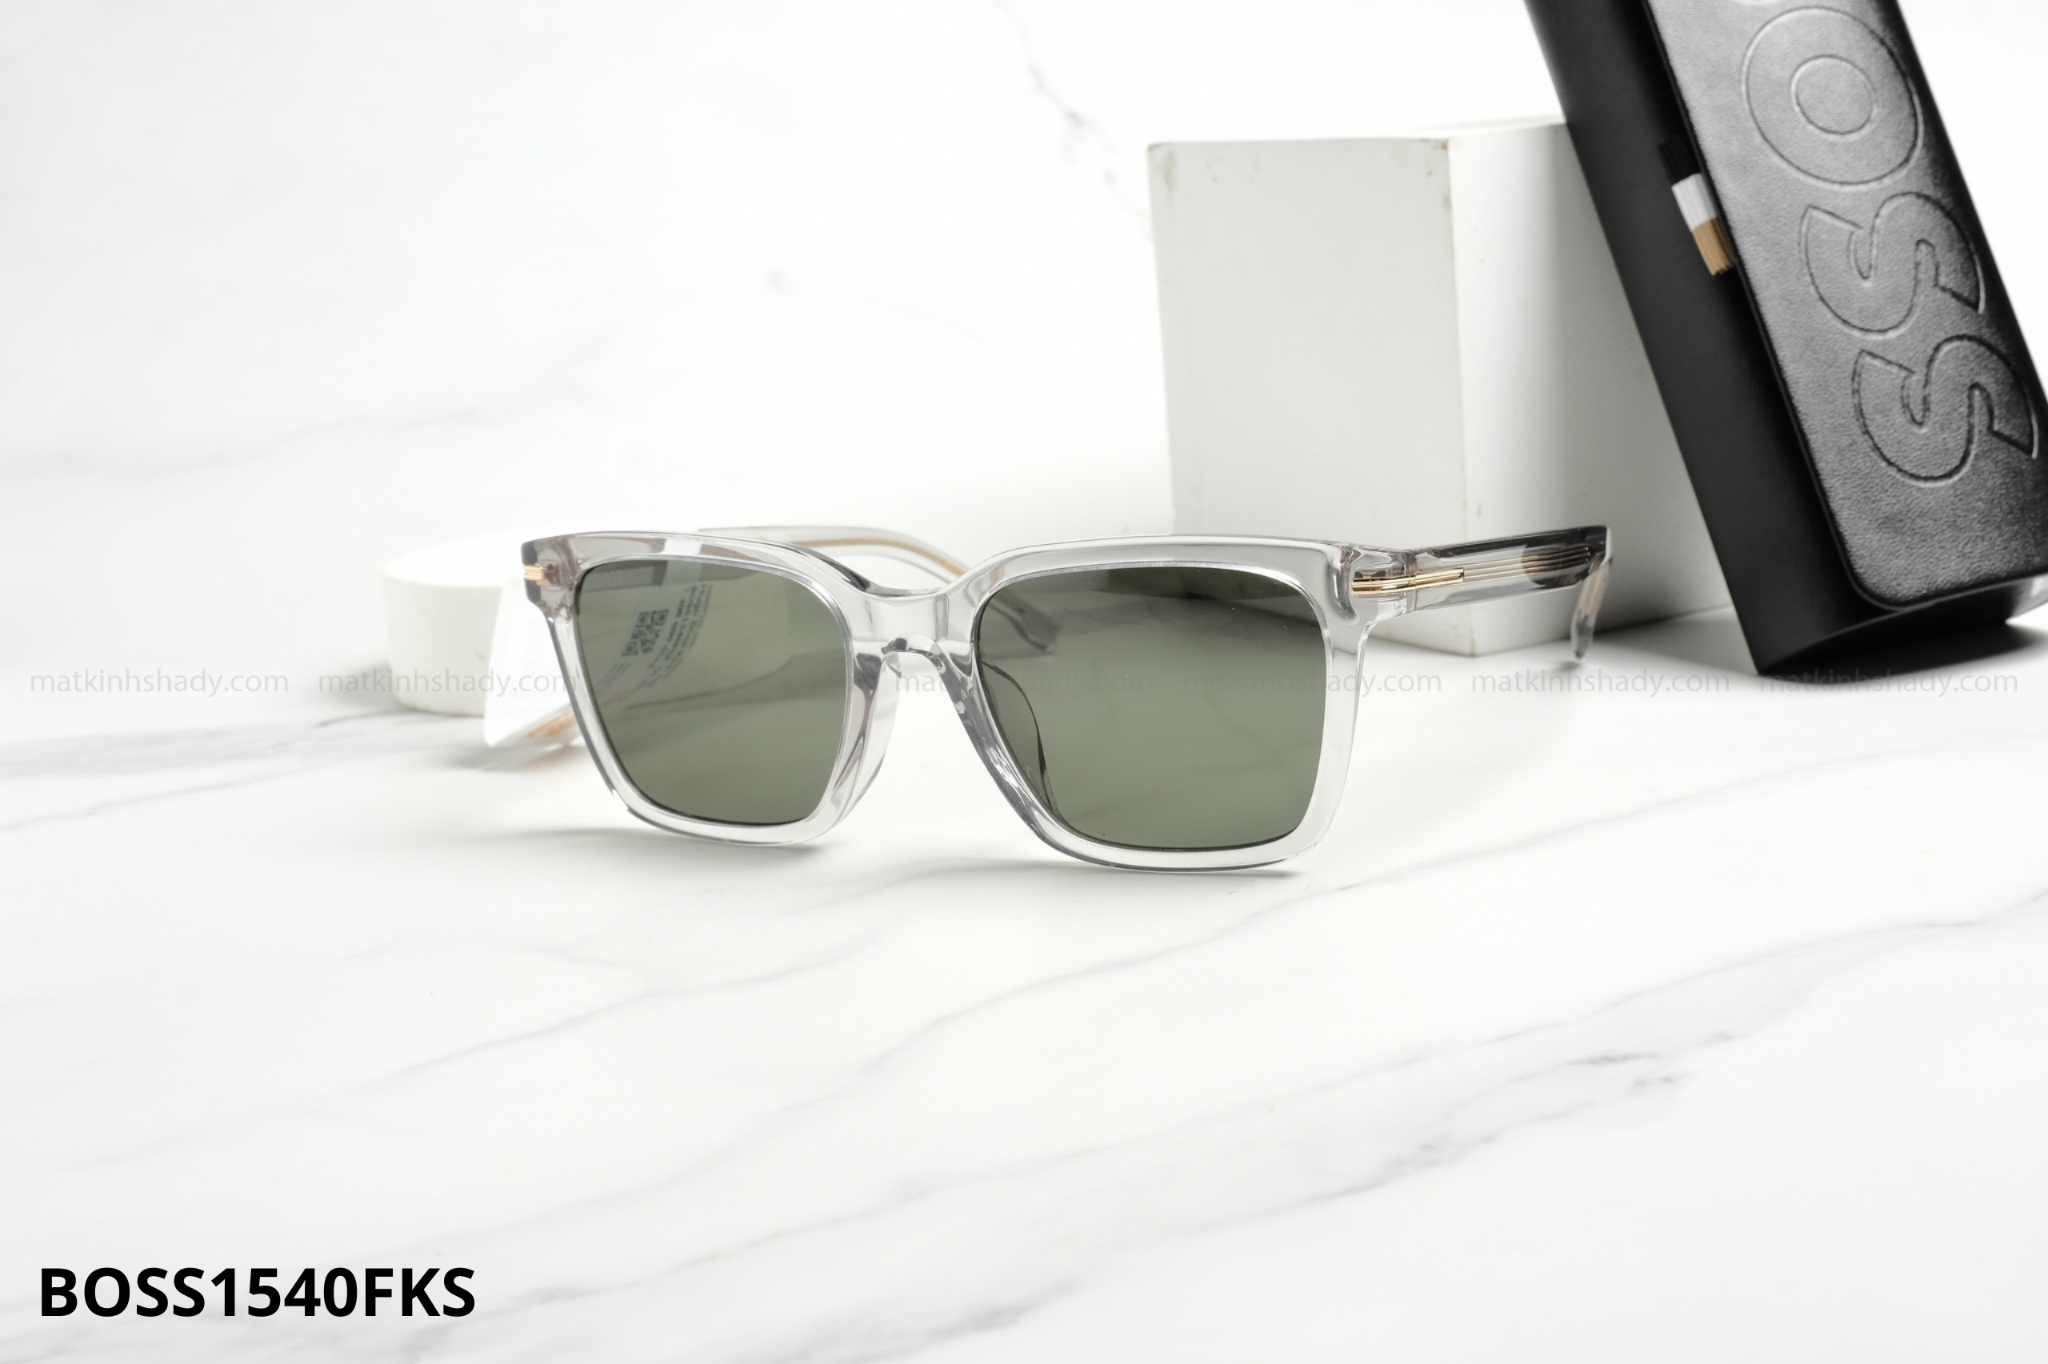  Boss Eyewear - Sunglasses - Boss1540FKS 